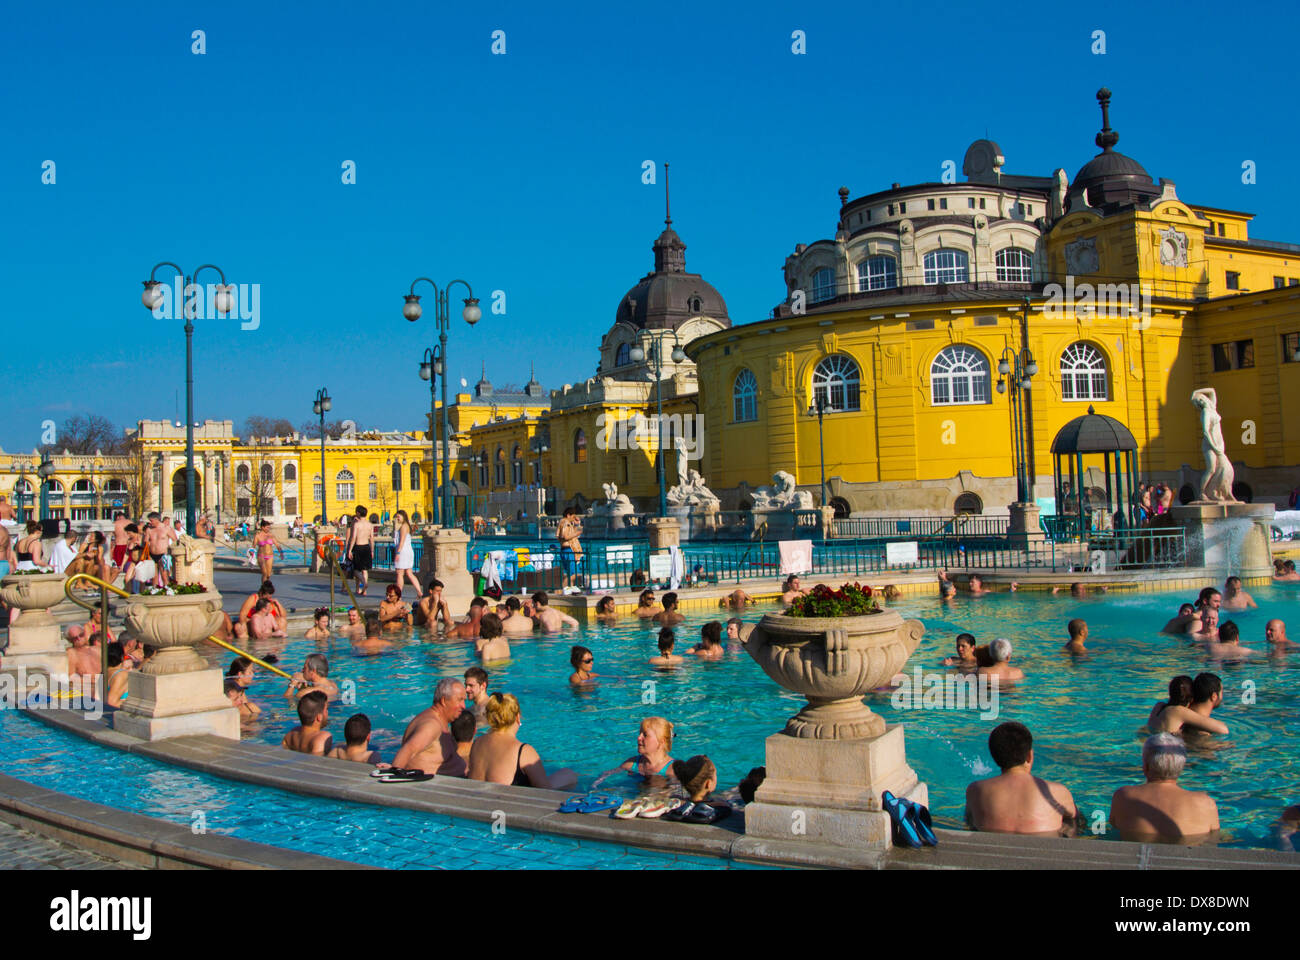 Piscinas termales al aire libre, balneario Szechenyi furdo, Varosliget, Budapest, Hungría Foto de stock